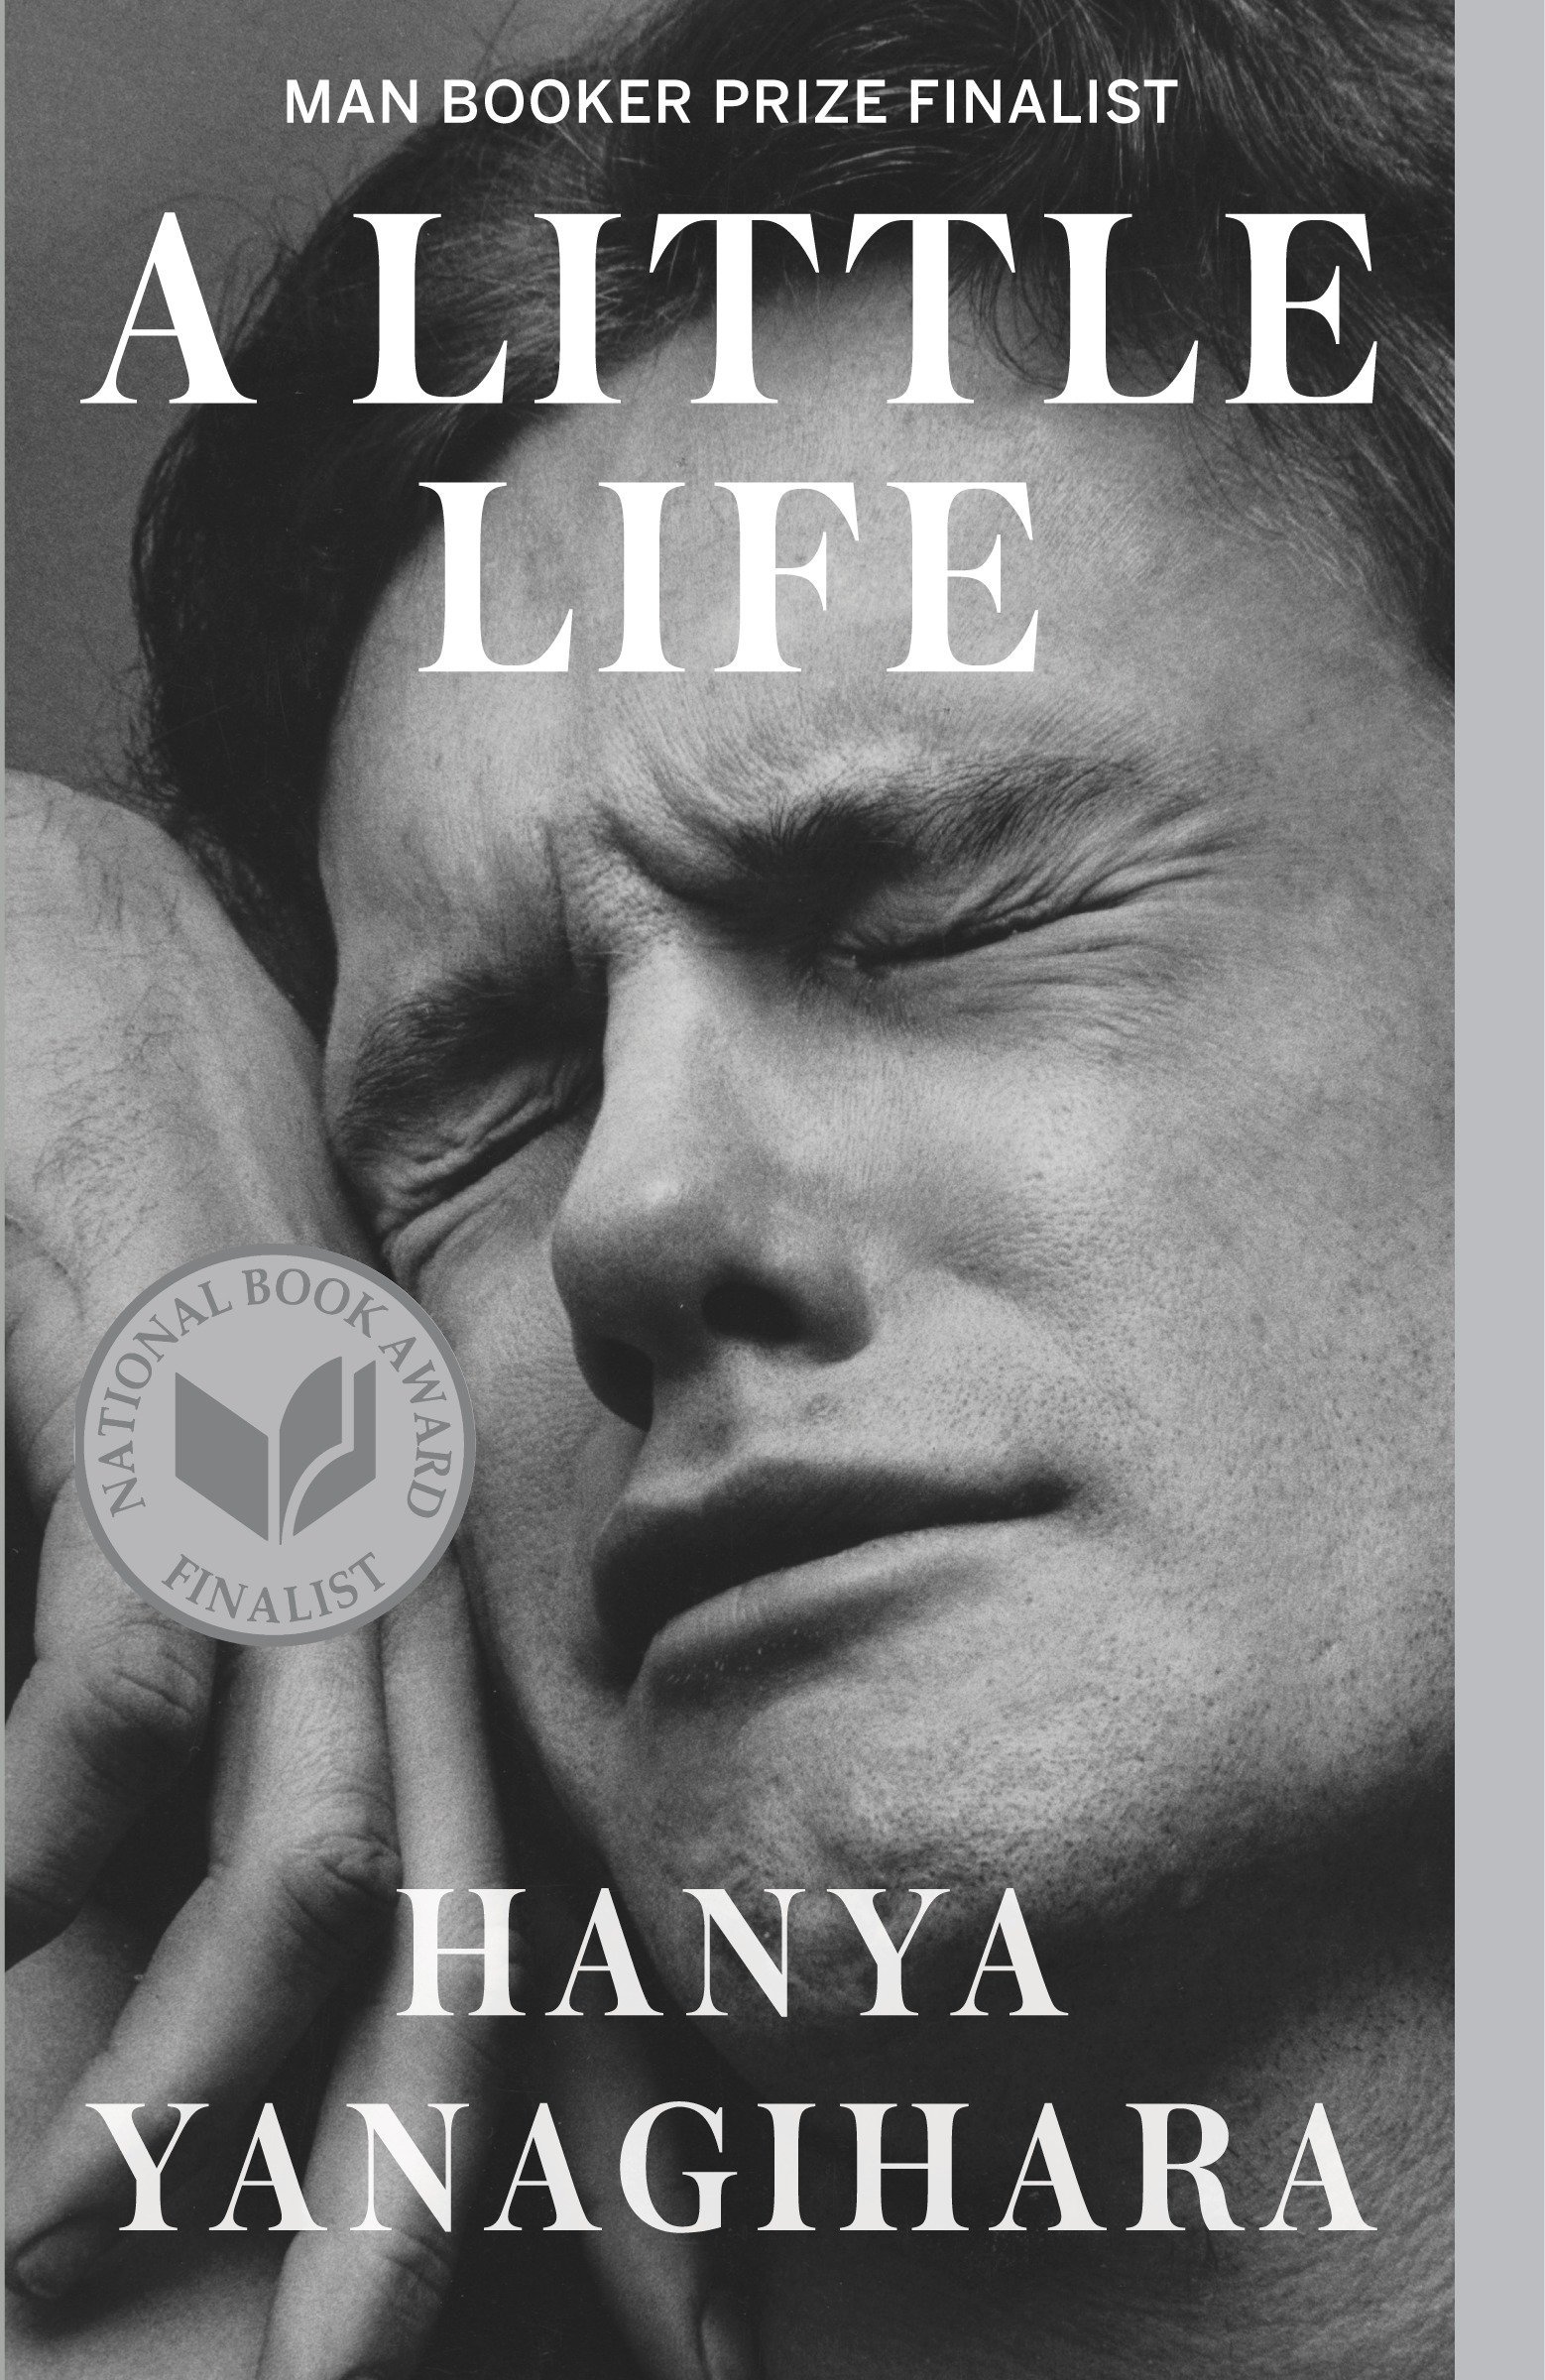 Hanya Yanagihara: A Little Life (Paperback, 2015, Doubleday)